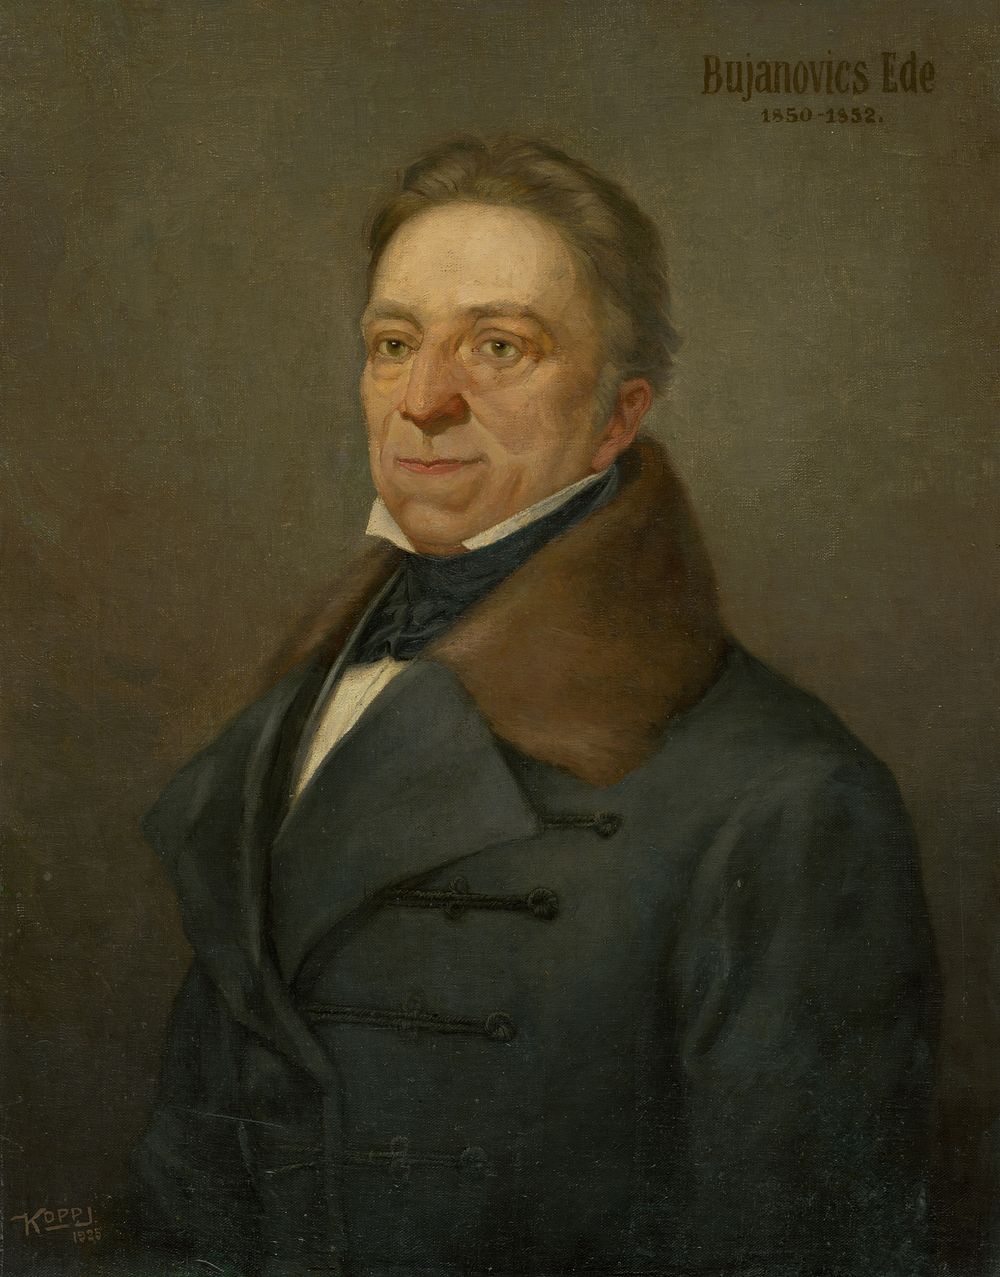 Portrait of ede bujanovics